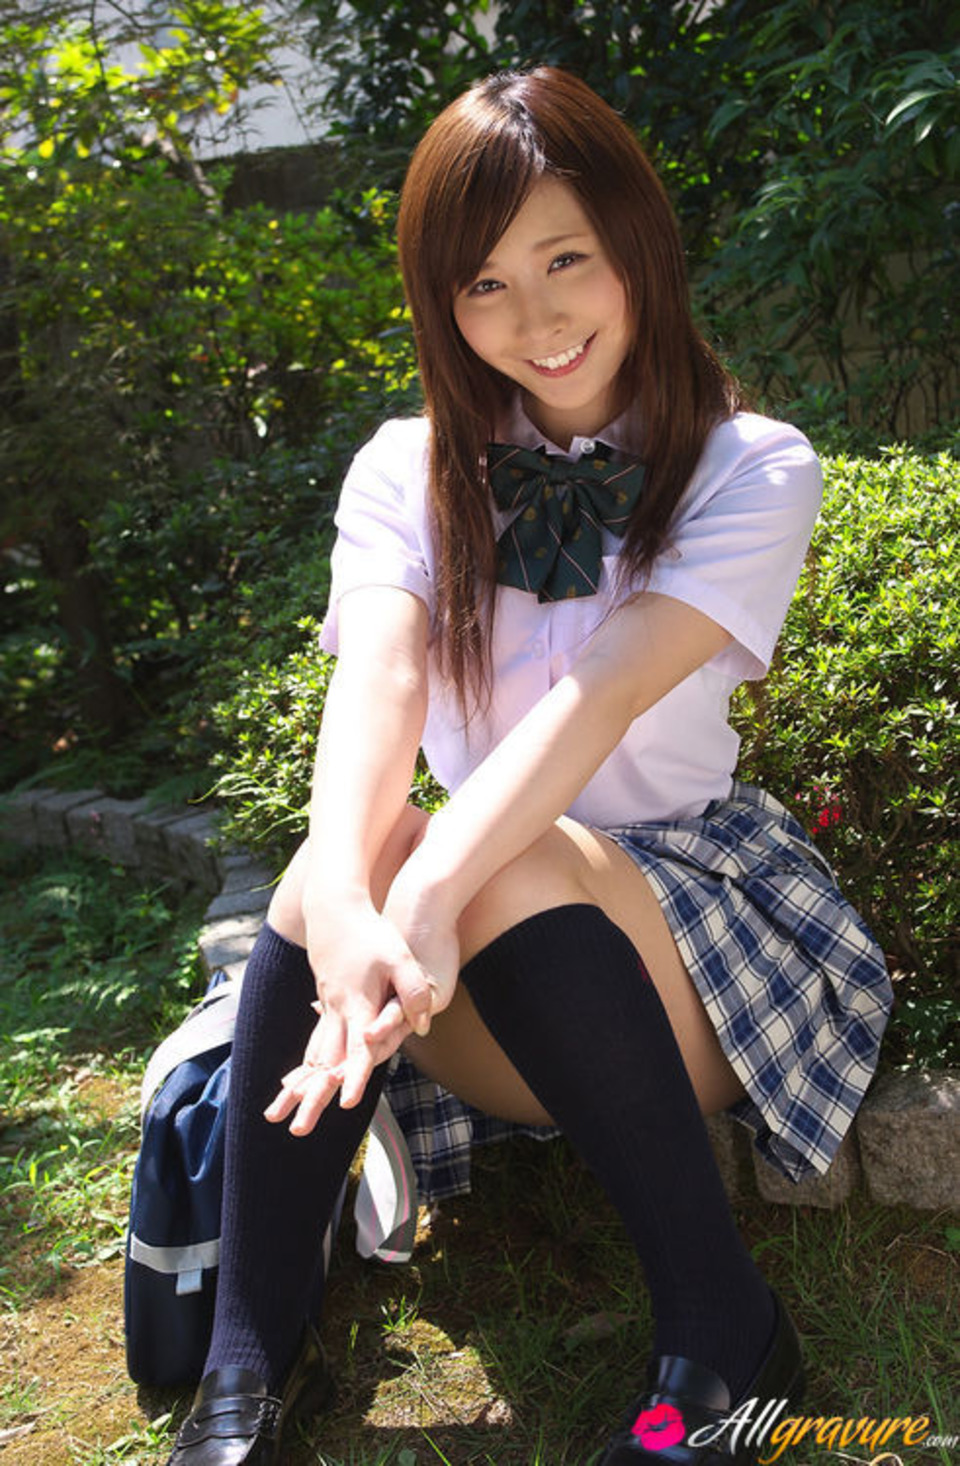 All Gravure Stockings - Iyo Hanaki cute gravure schoolgirl - Teens In Asia